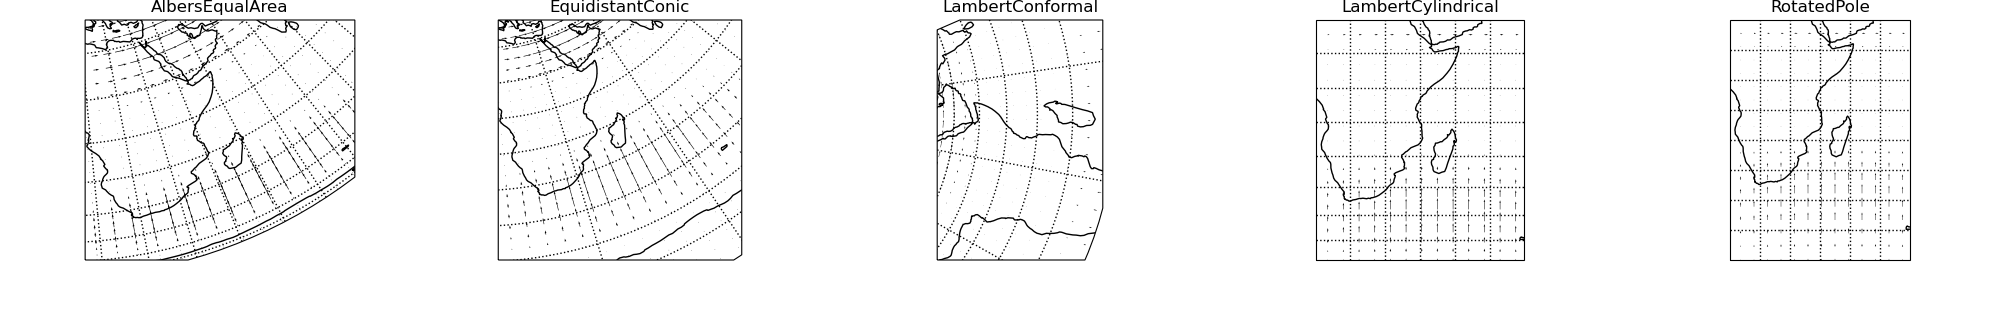 AlbersEqualArea, EquidistantConic, LambertConformal, LambertCylindrical, RotatedPole